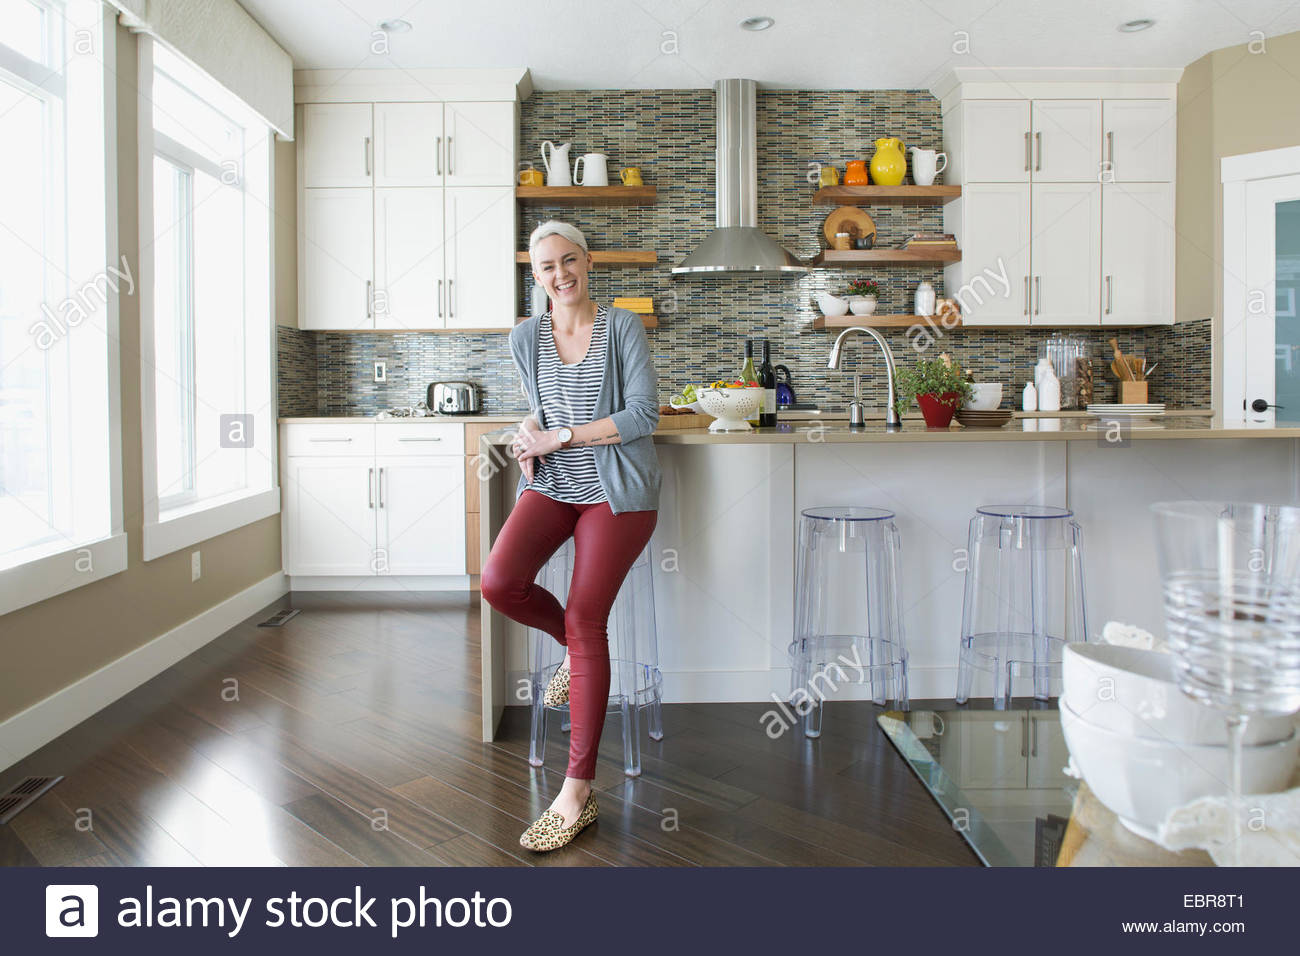 Portrait of smiling woman in kitchen Banque D'Images